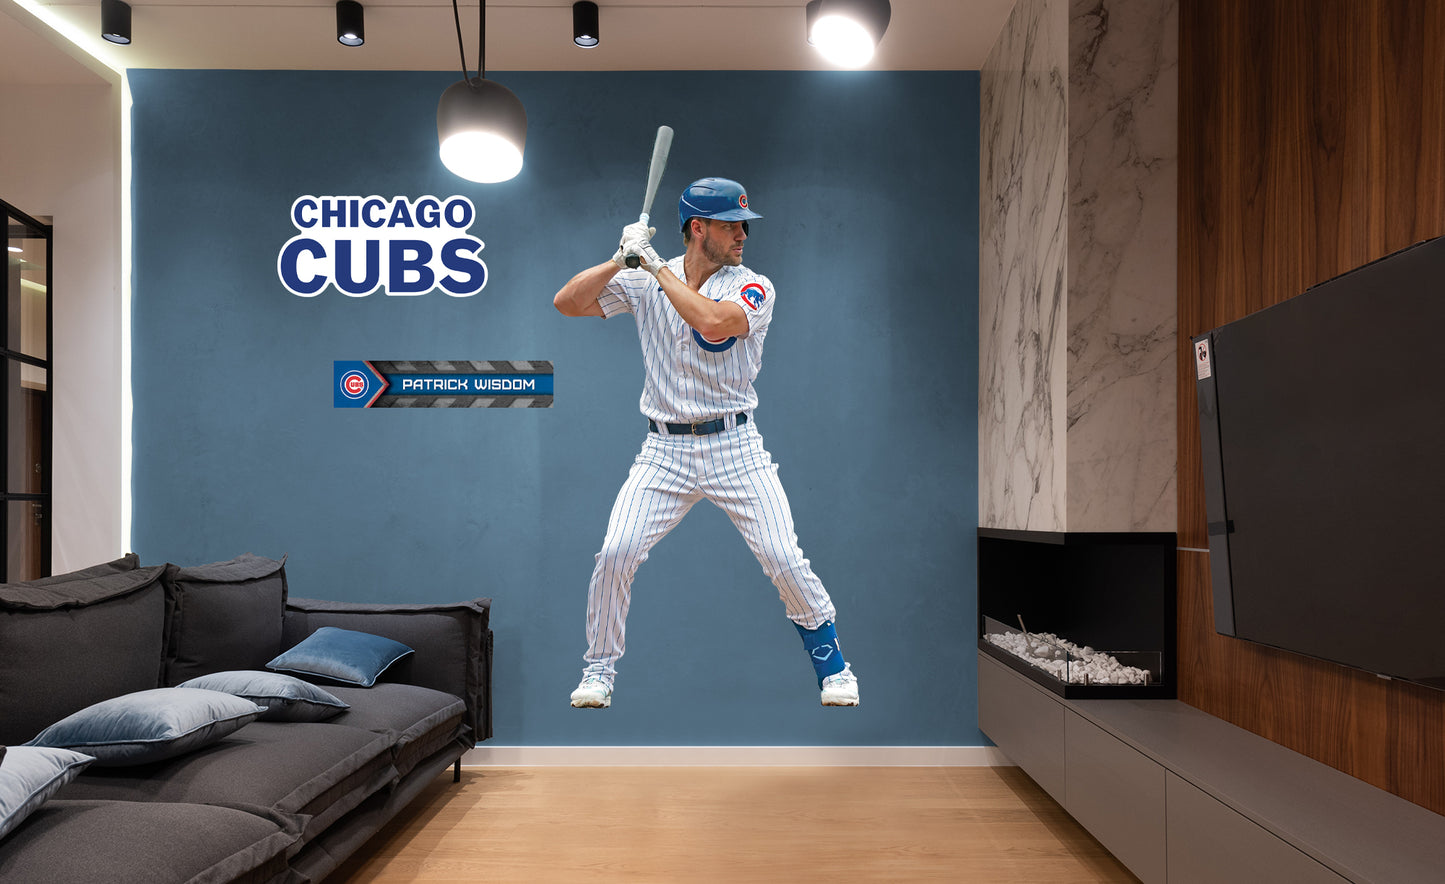 Chicago Cubs: Patrick Wisdom 2022 Foam Core Cutout - Officially